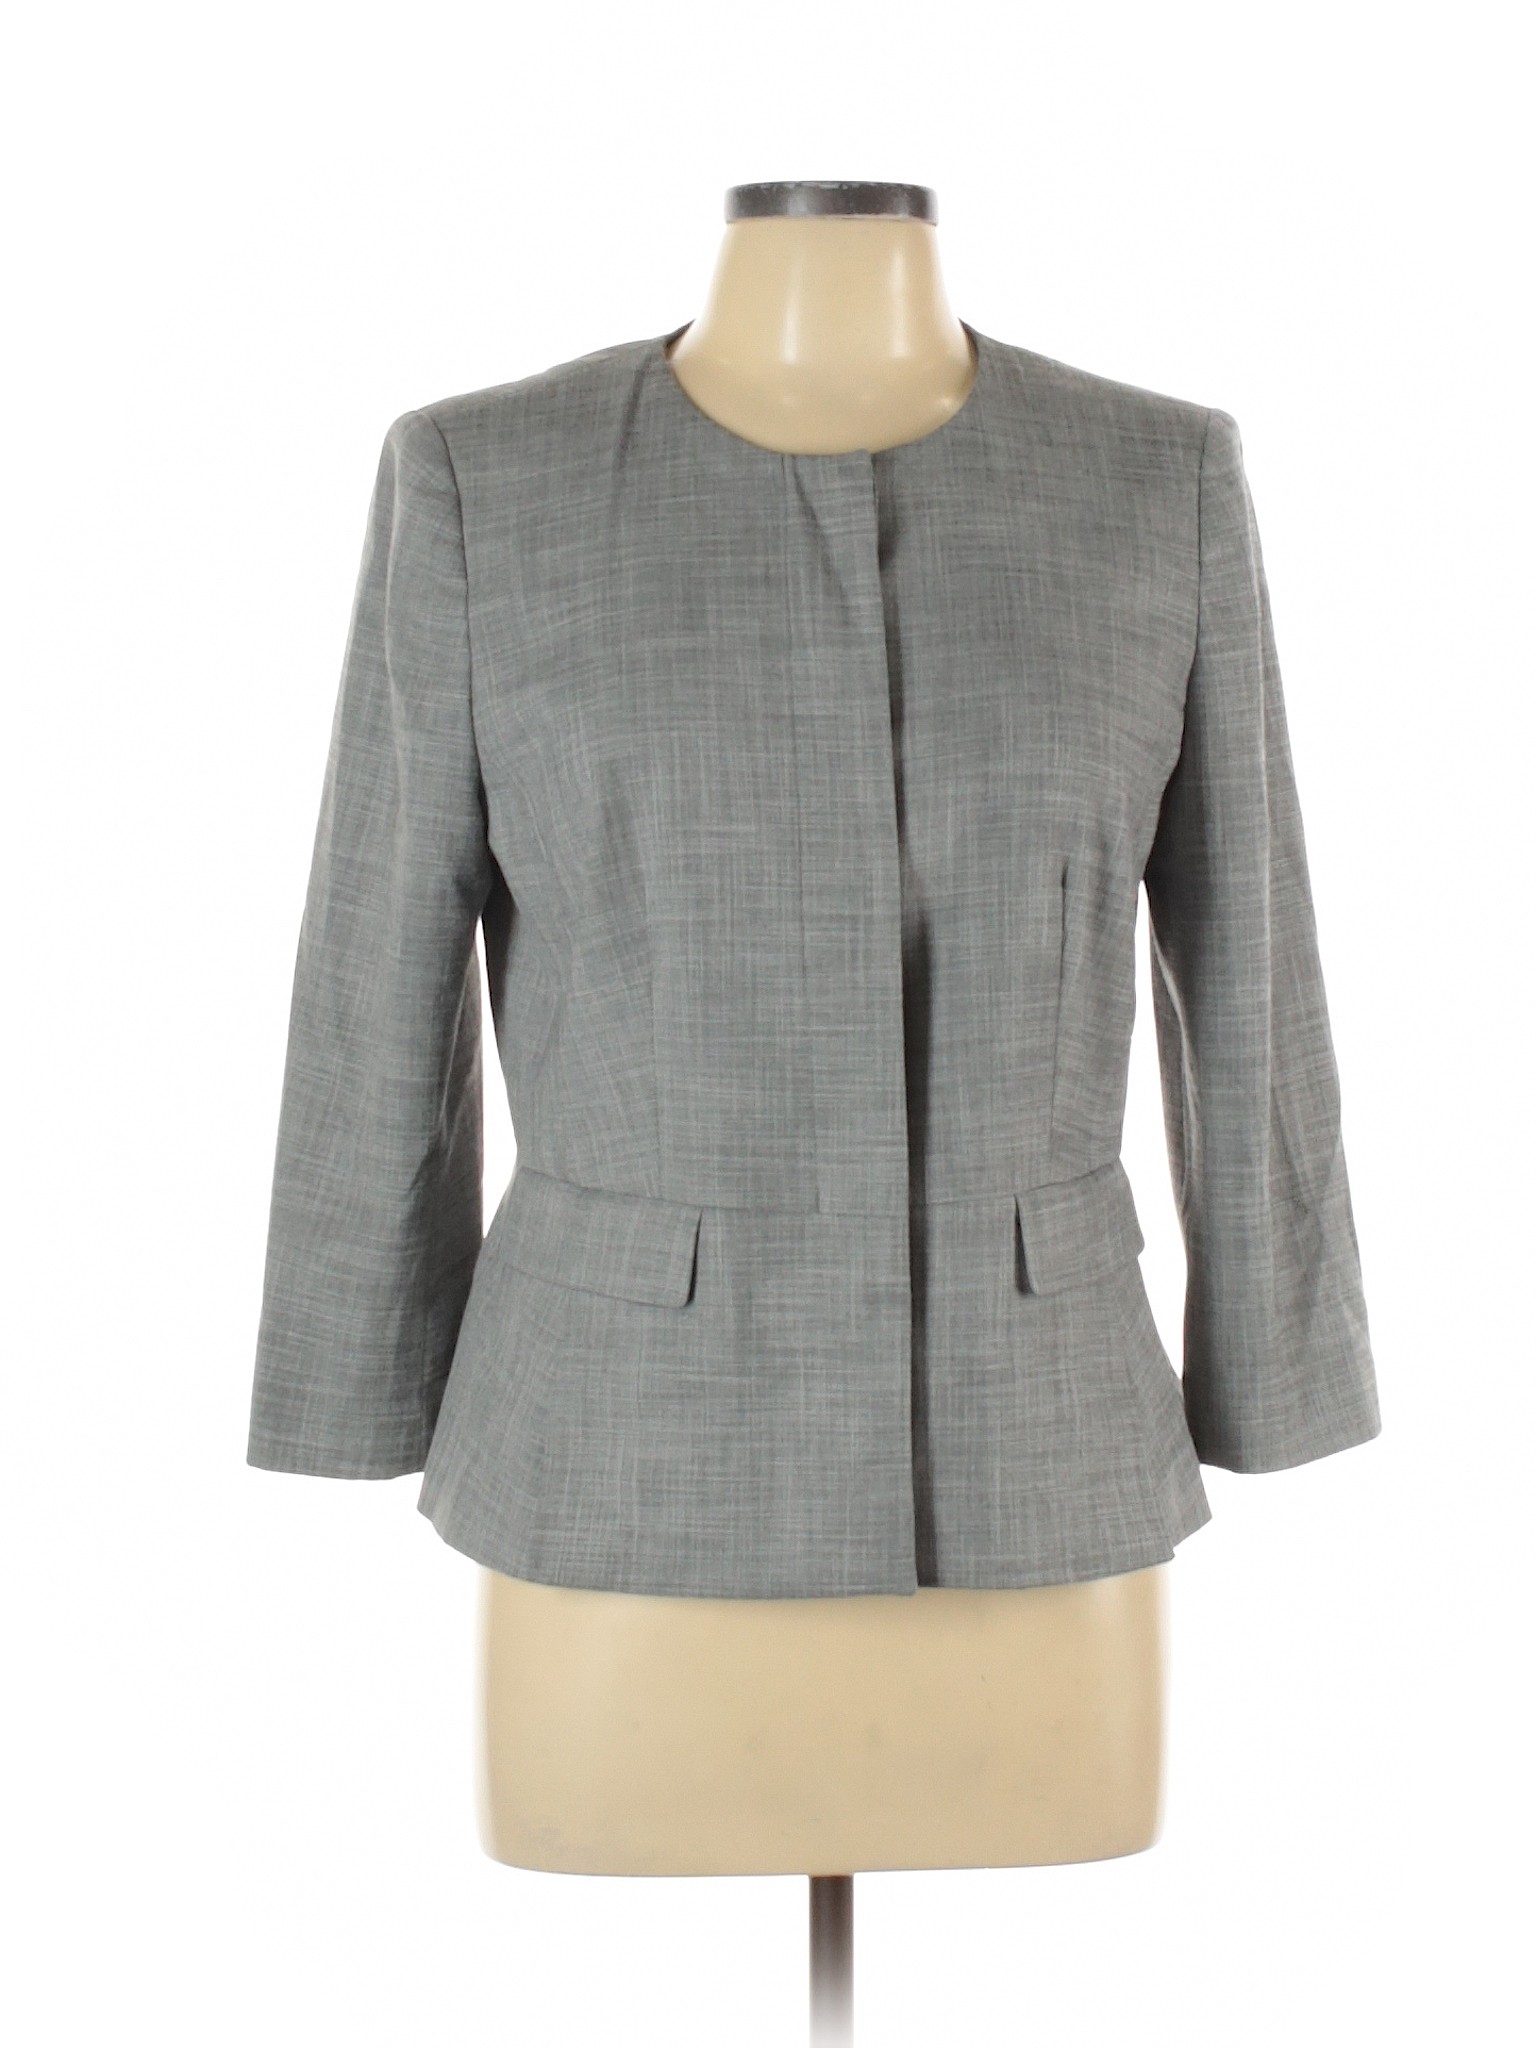 Ann Taylor Women Gray Jacket 10 | eBay